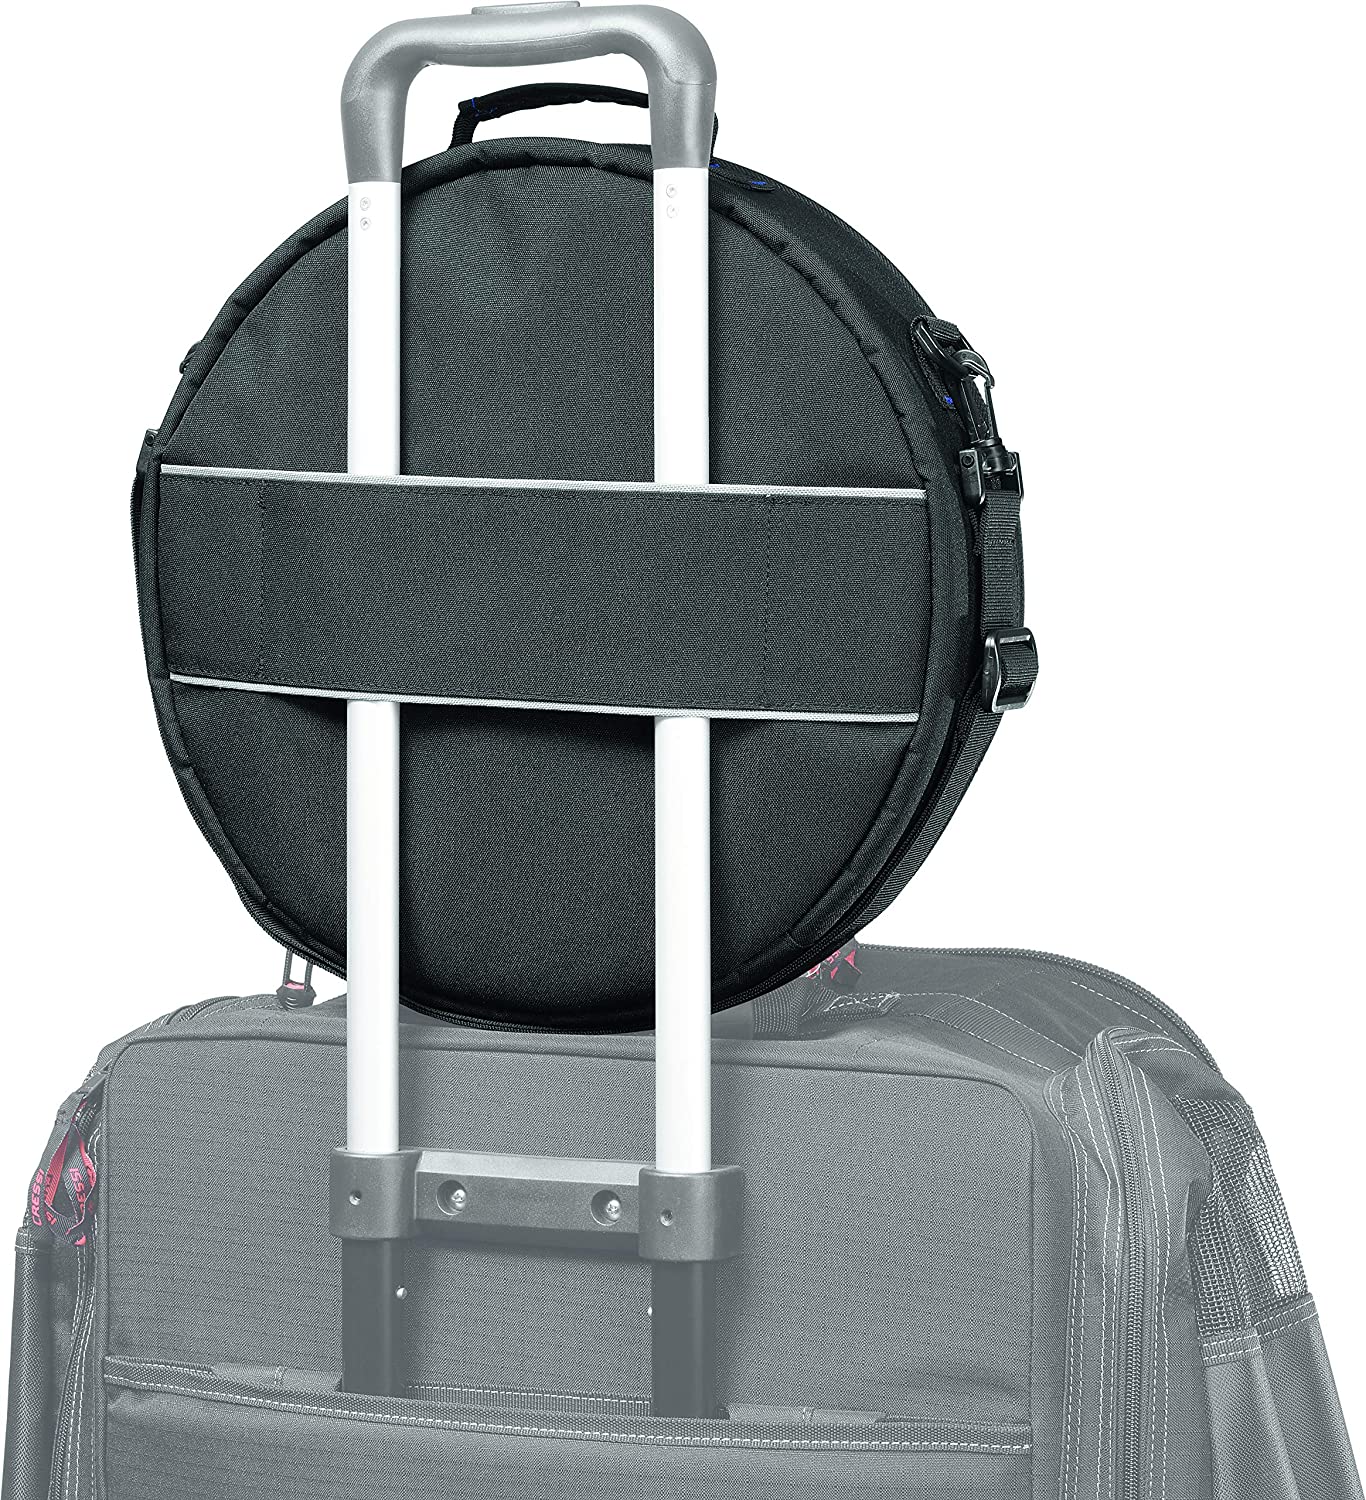 Cressi Regulator Bag: Convenient Dive Gear Transport in a Backpack